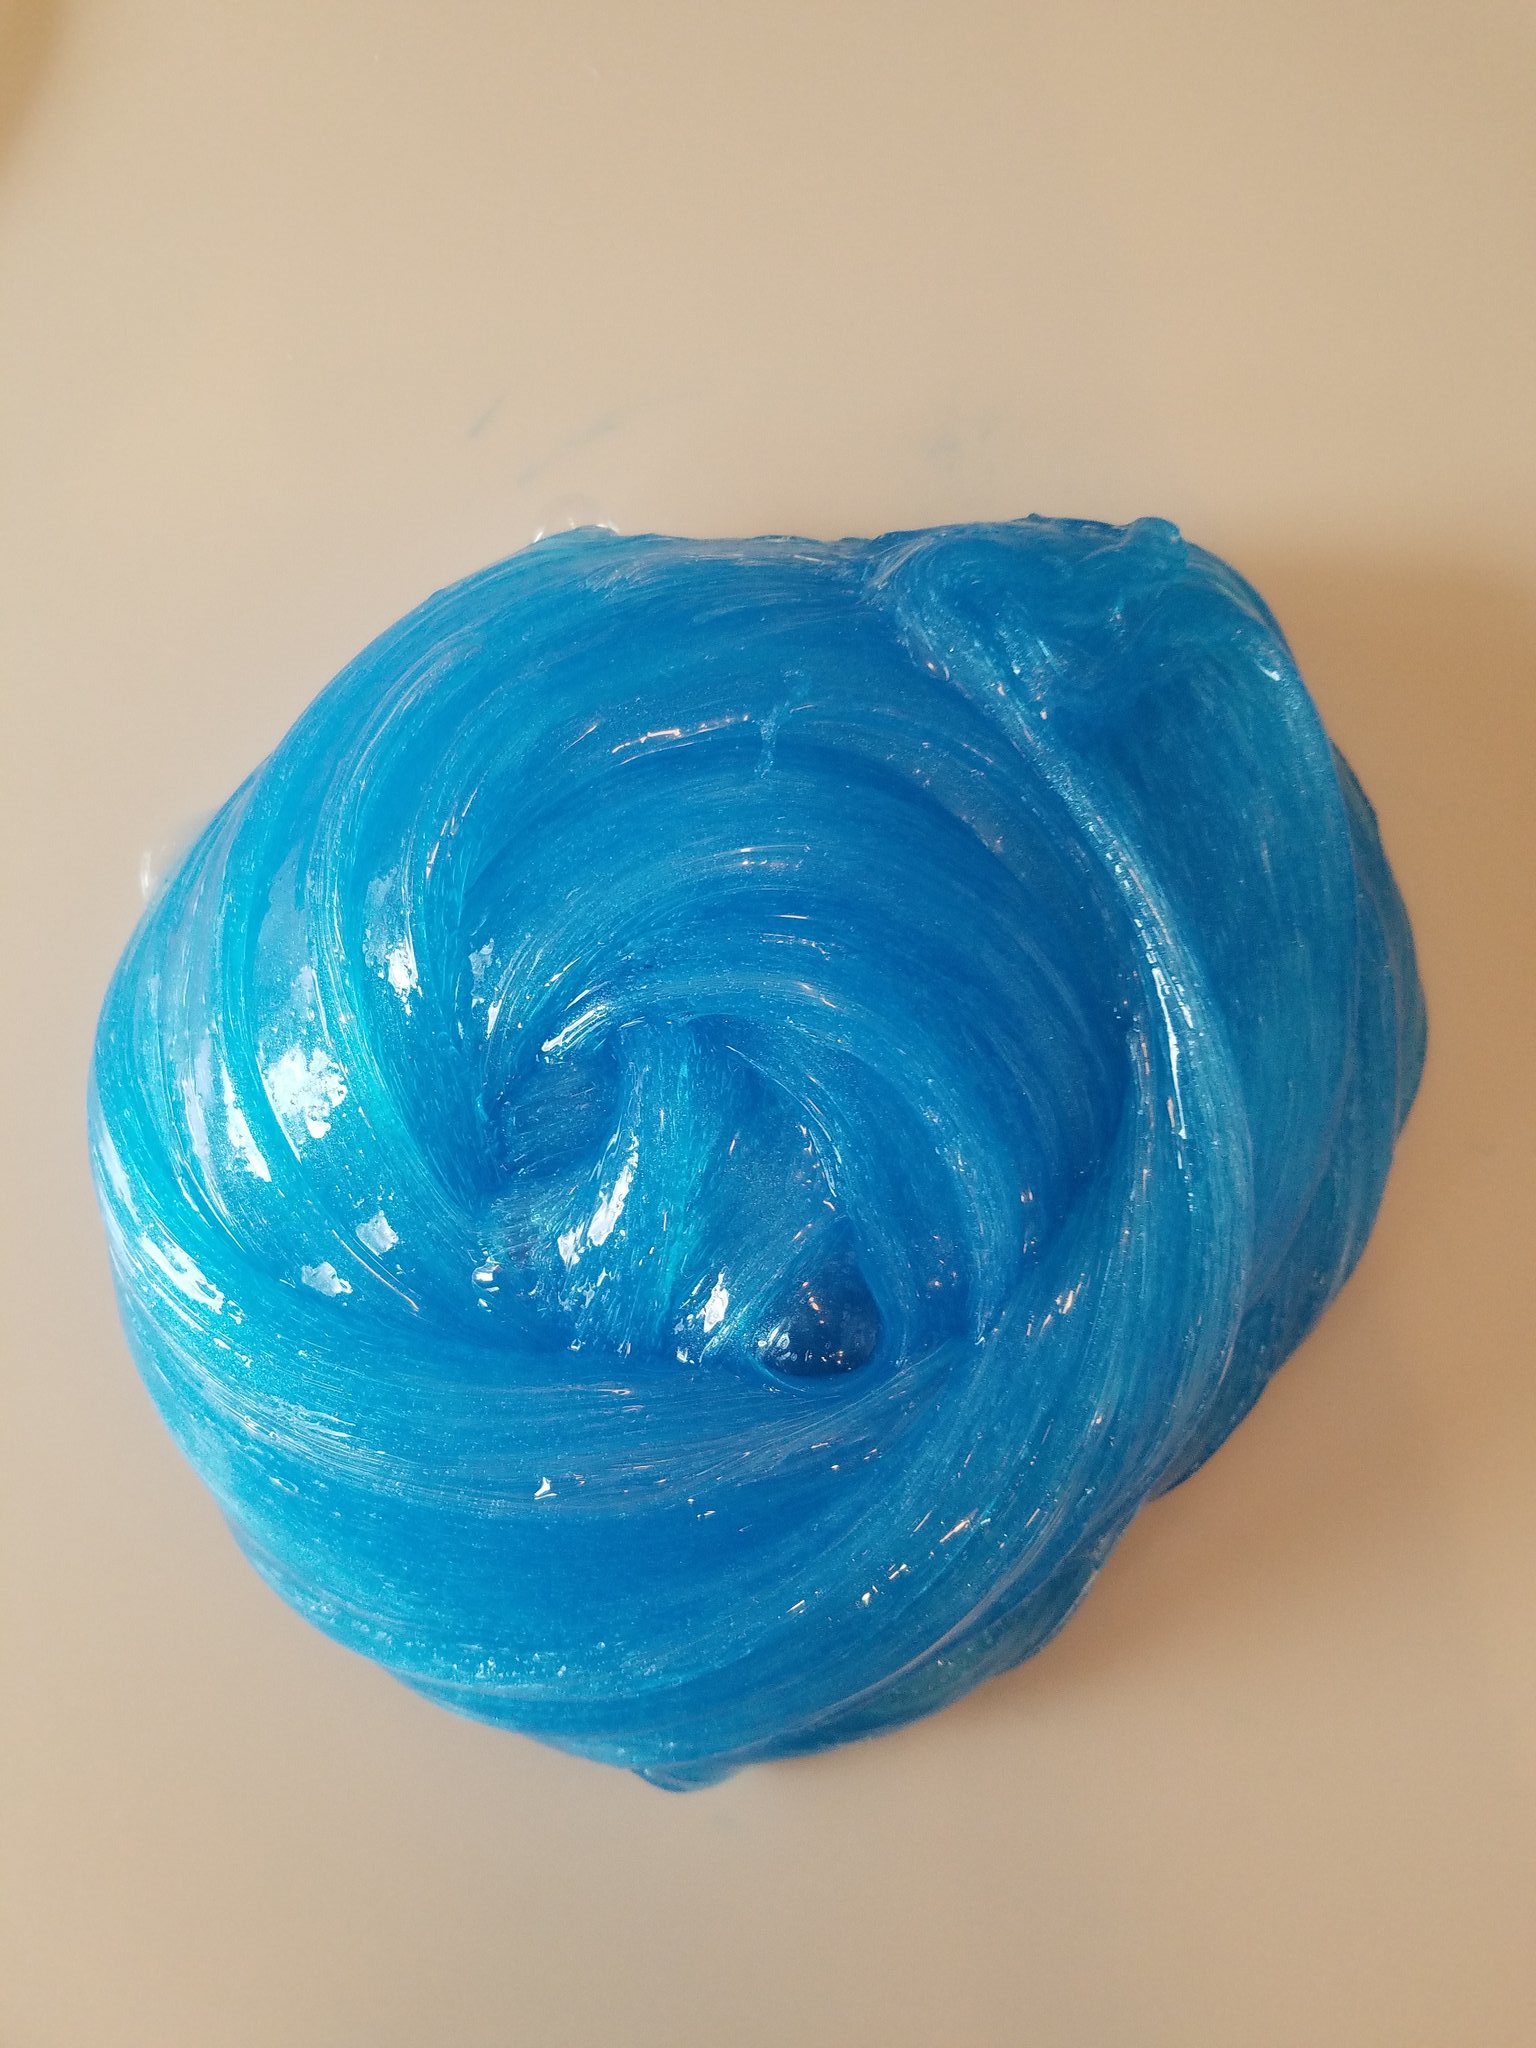 Blue Raspberry Slushy Handmade Slime